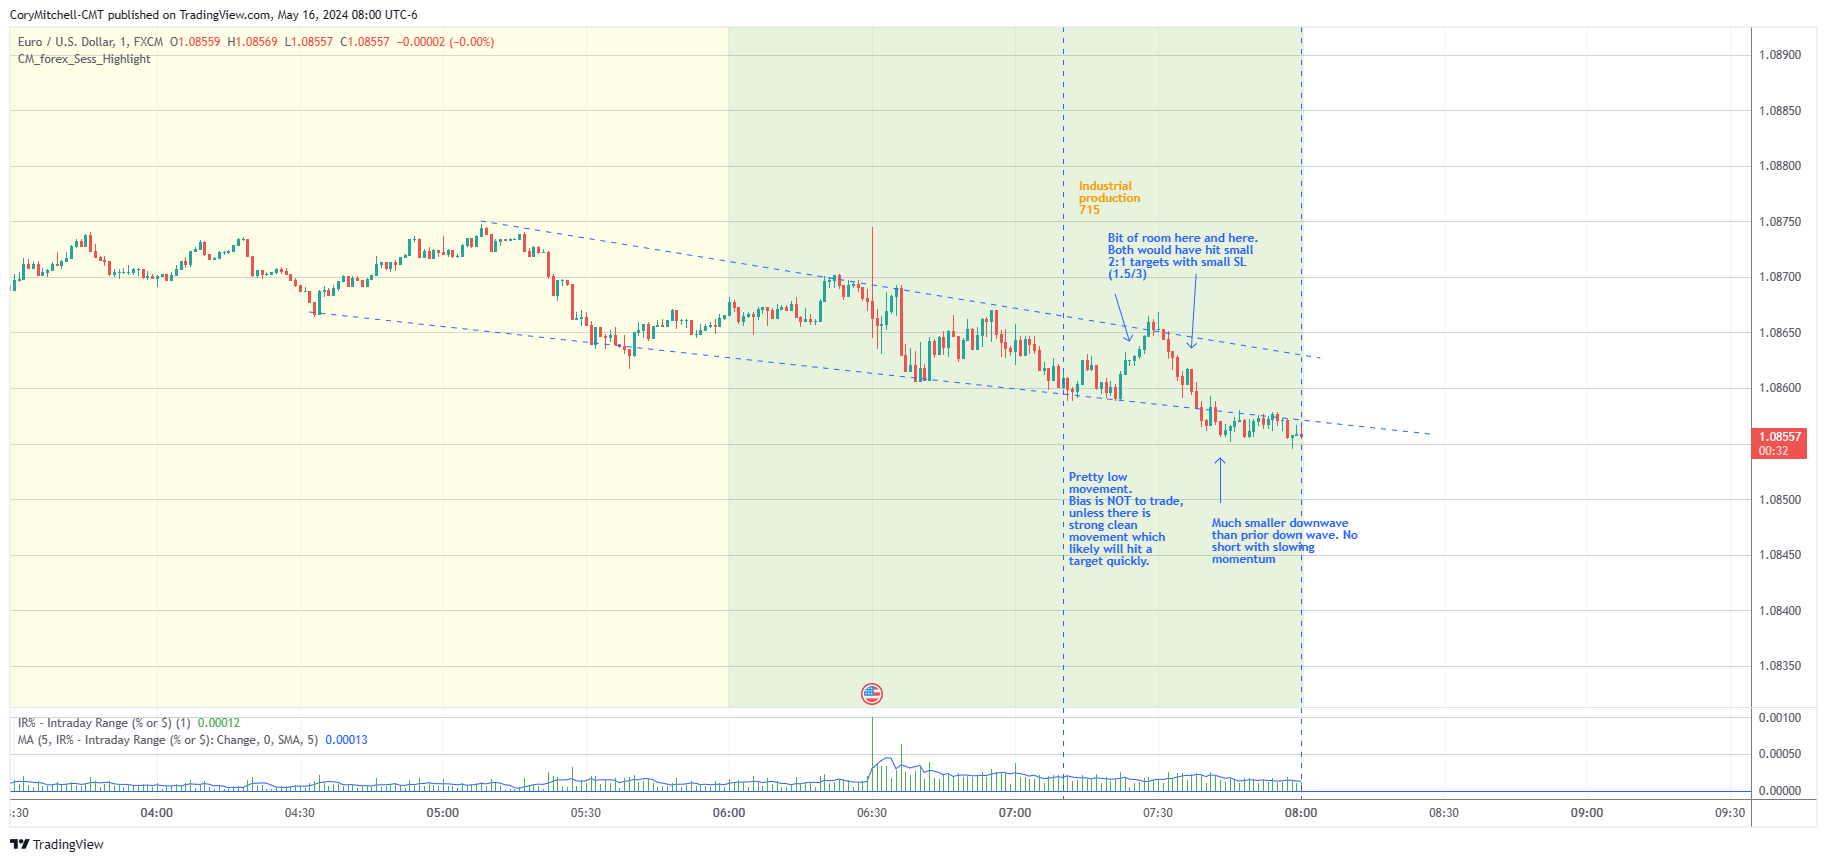 EURUSD 1 minute chart day trading examples May 16 2024